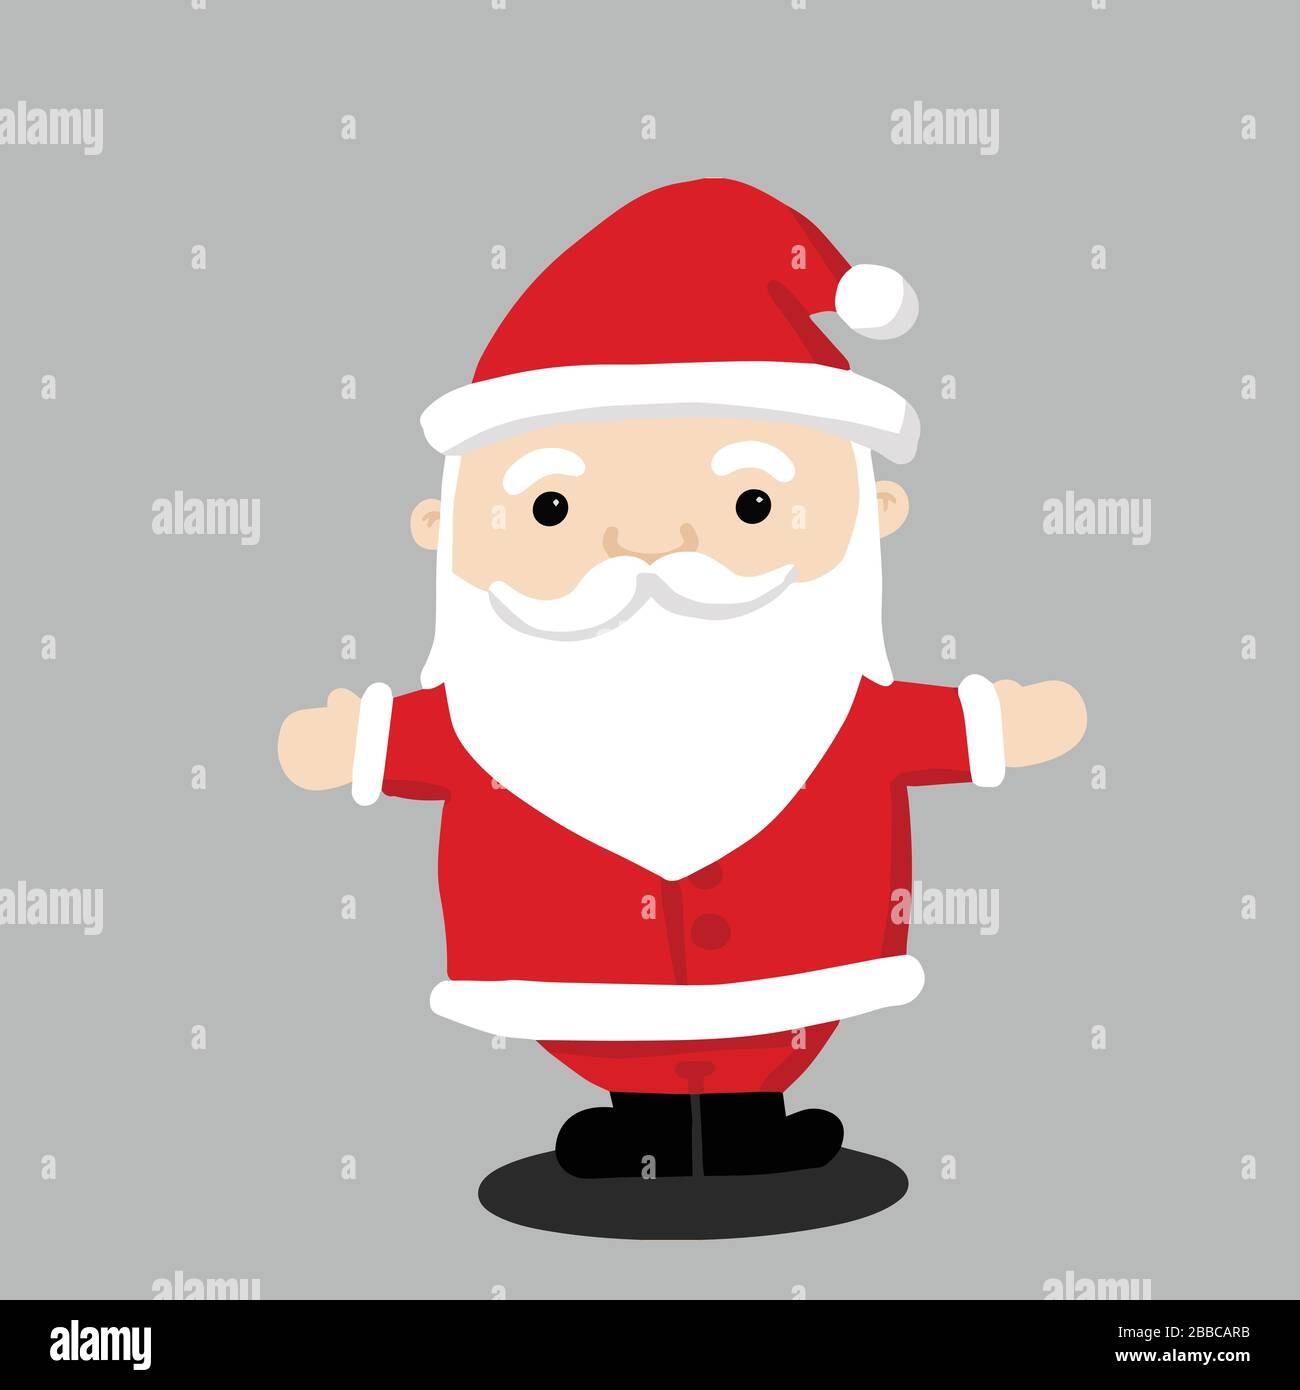 Santa Clause cartoon. For christmas, new year design greeting card Stock Vector